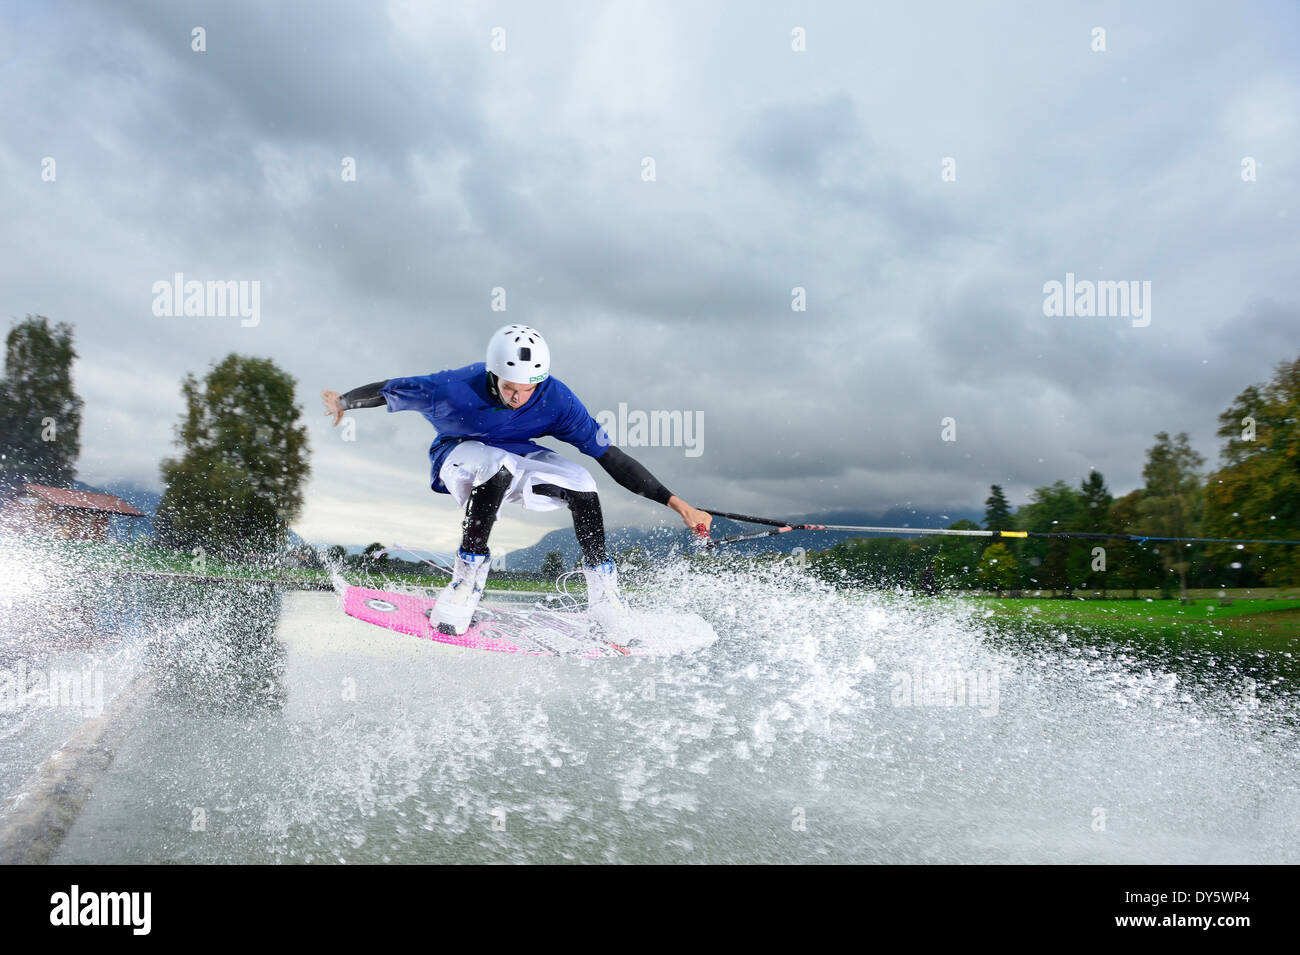 Young man surfing on wakeboard, wakeboarding at lake Neubeurer See, Neubeuern, Rosenheim, Upper Bavaria, Bavaria, Germany Stock Photo